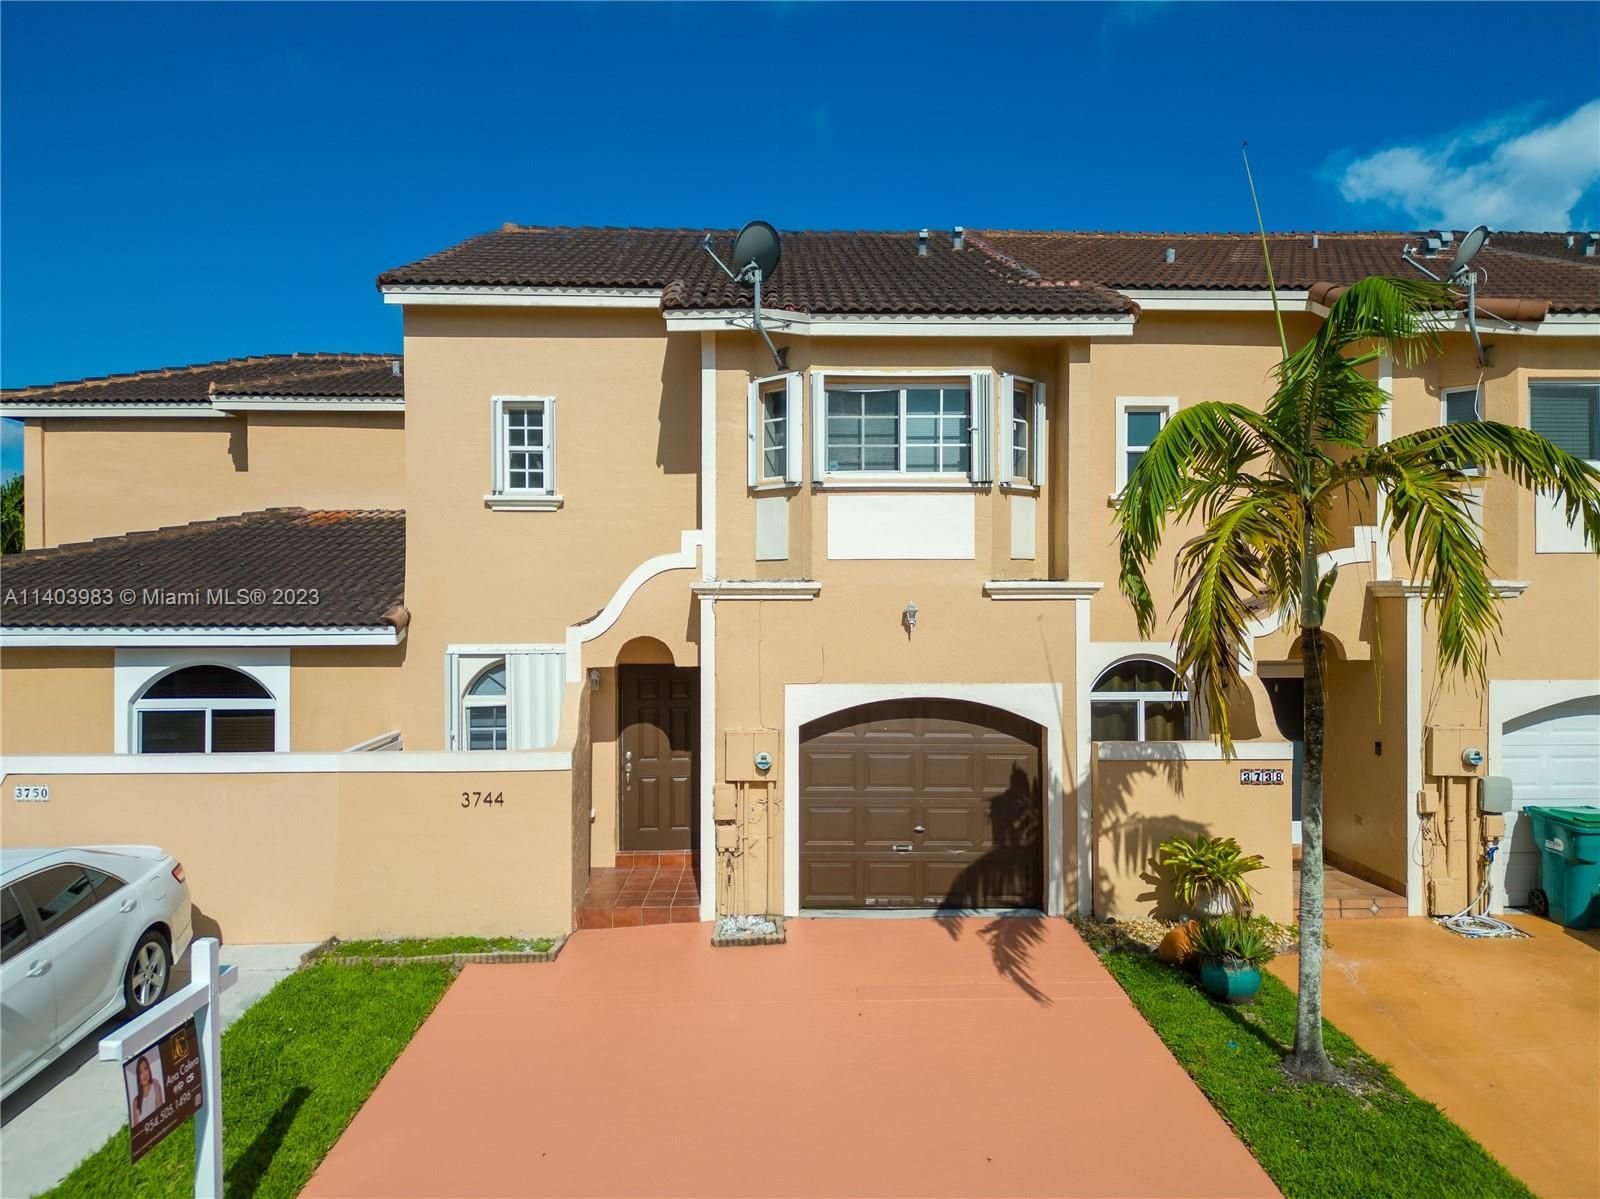 Real estate property located at 3744 153rd Ct, Miami-Dade County, Miami, FL